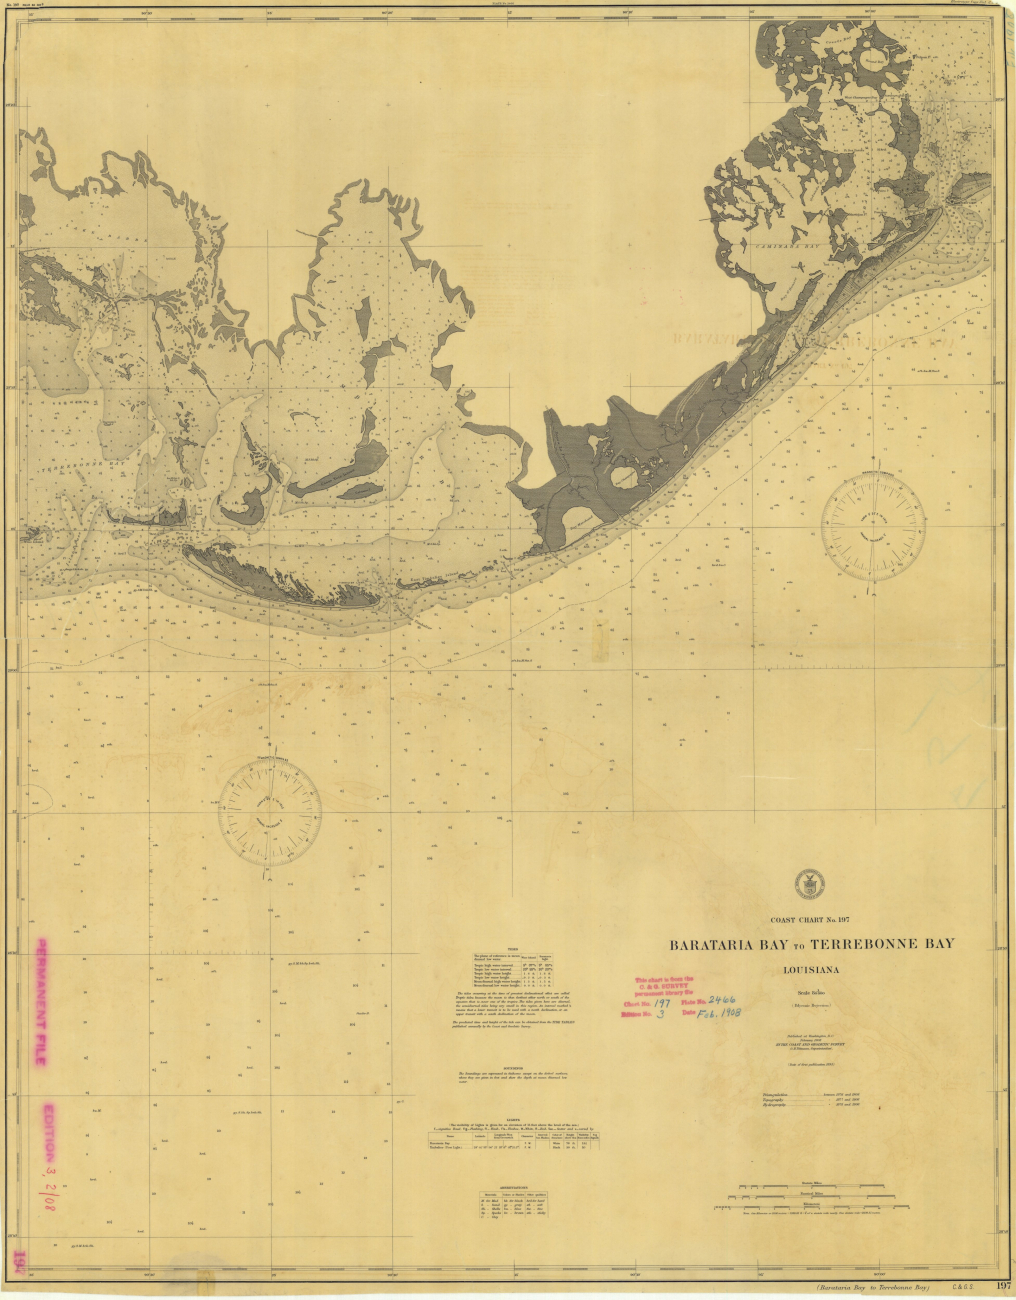 Barataria Bay to Terrebonne Bay, February 1908